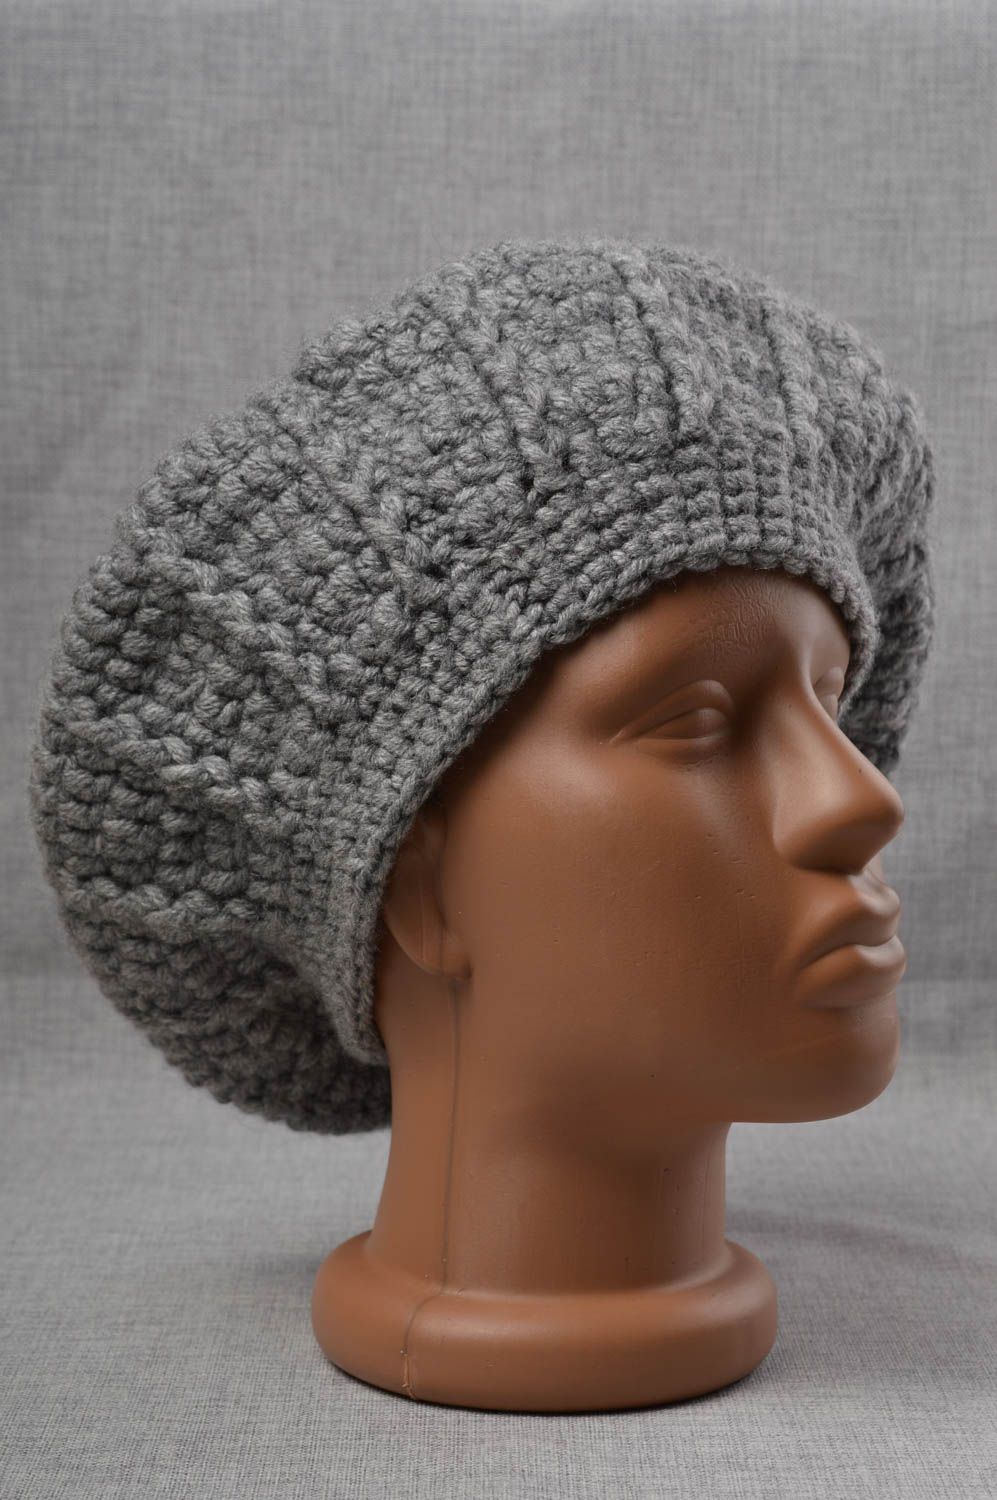 Beautiful handmade crocheted hat warm crochet hat fashion accessories for girls photo 1